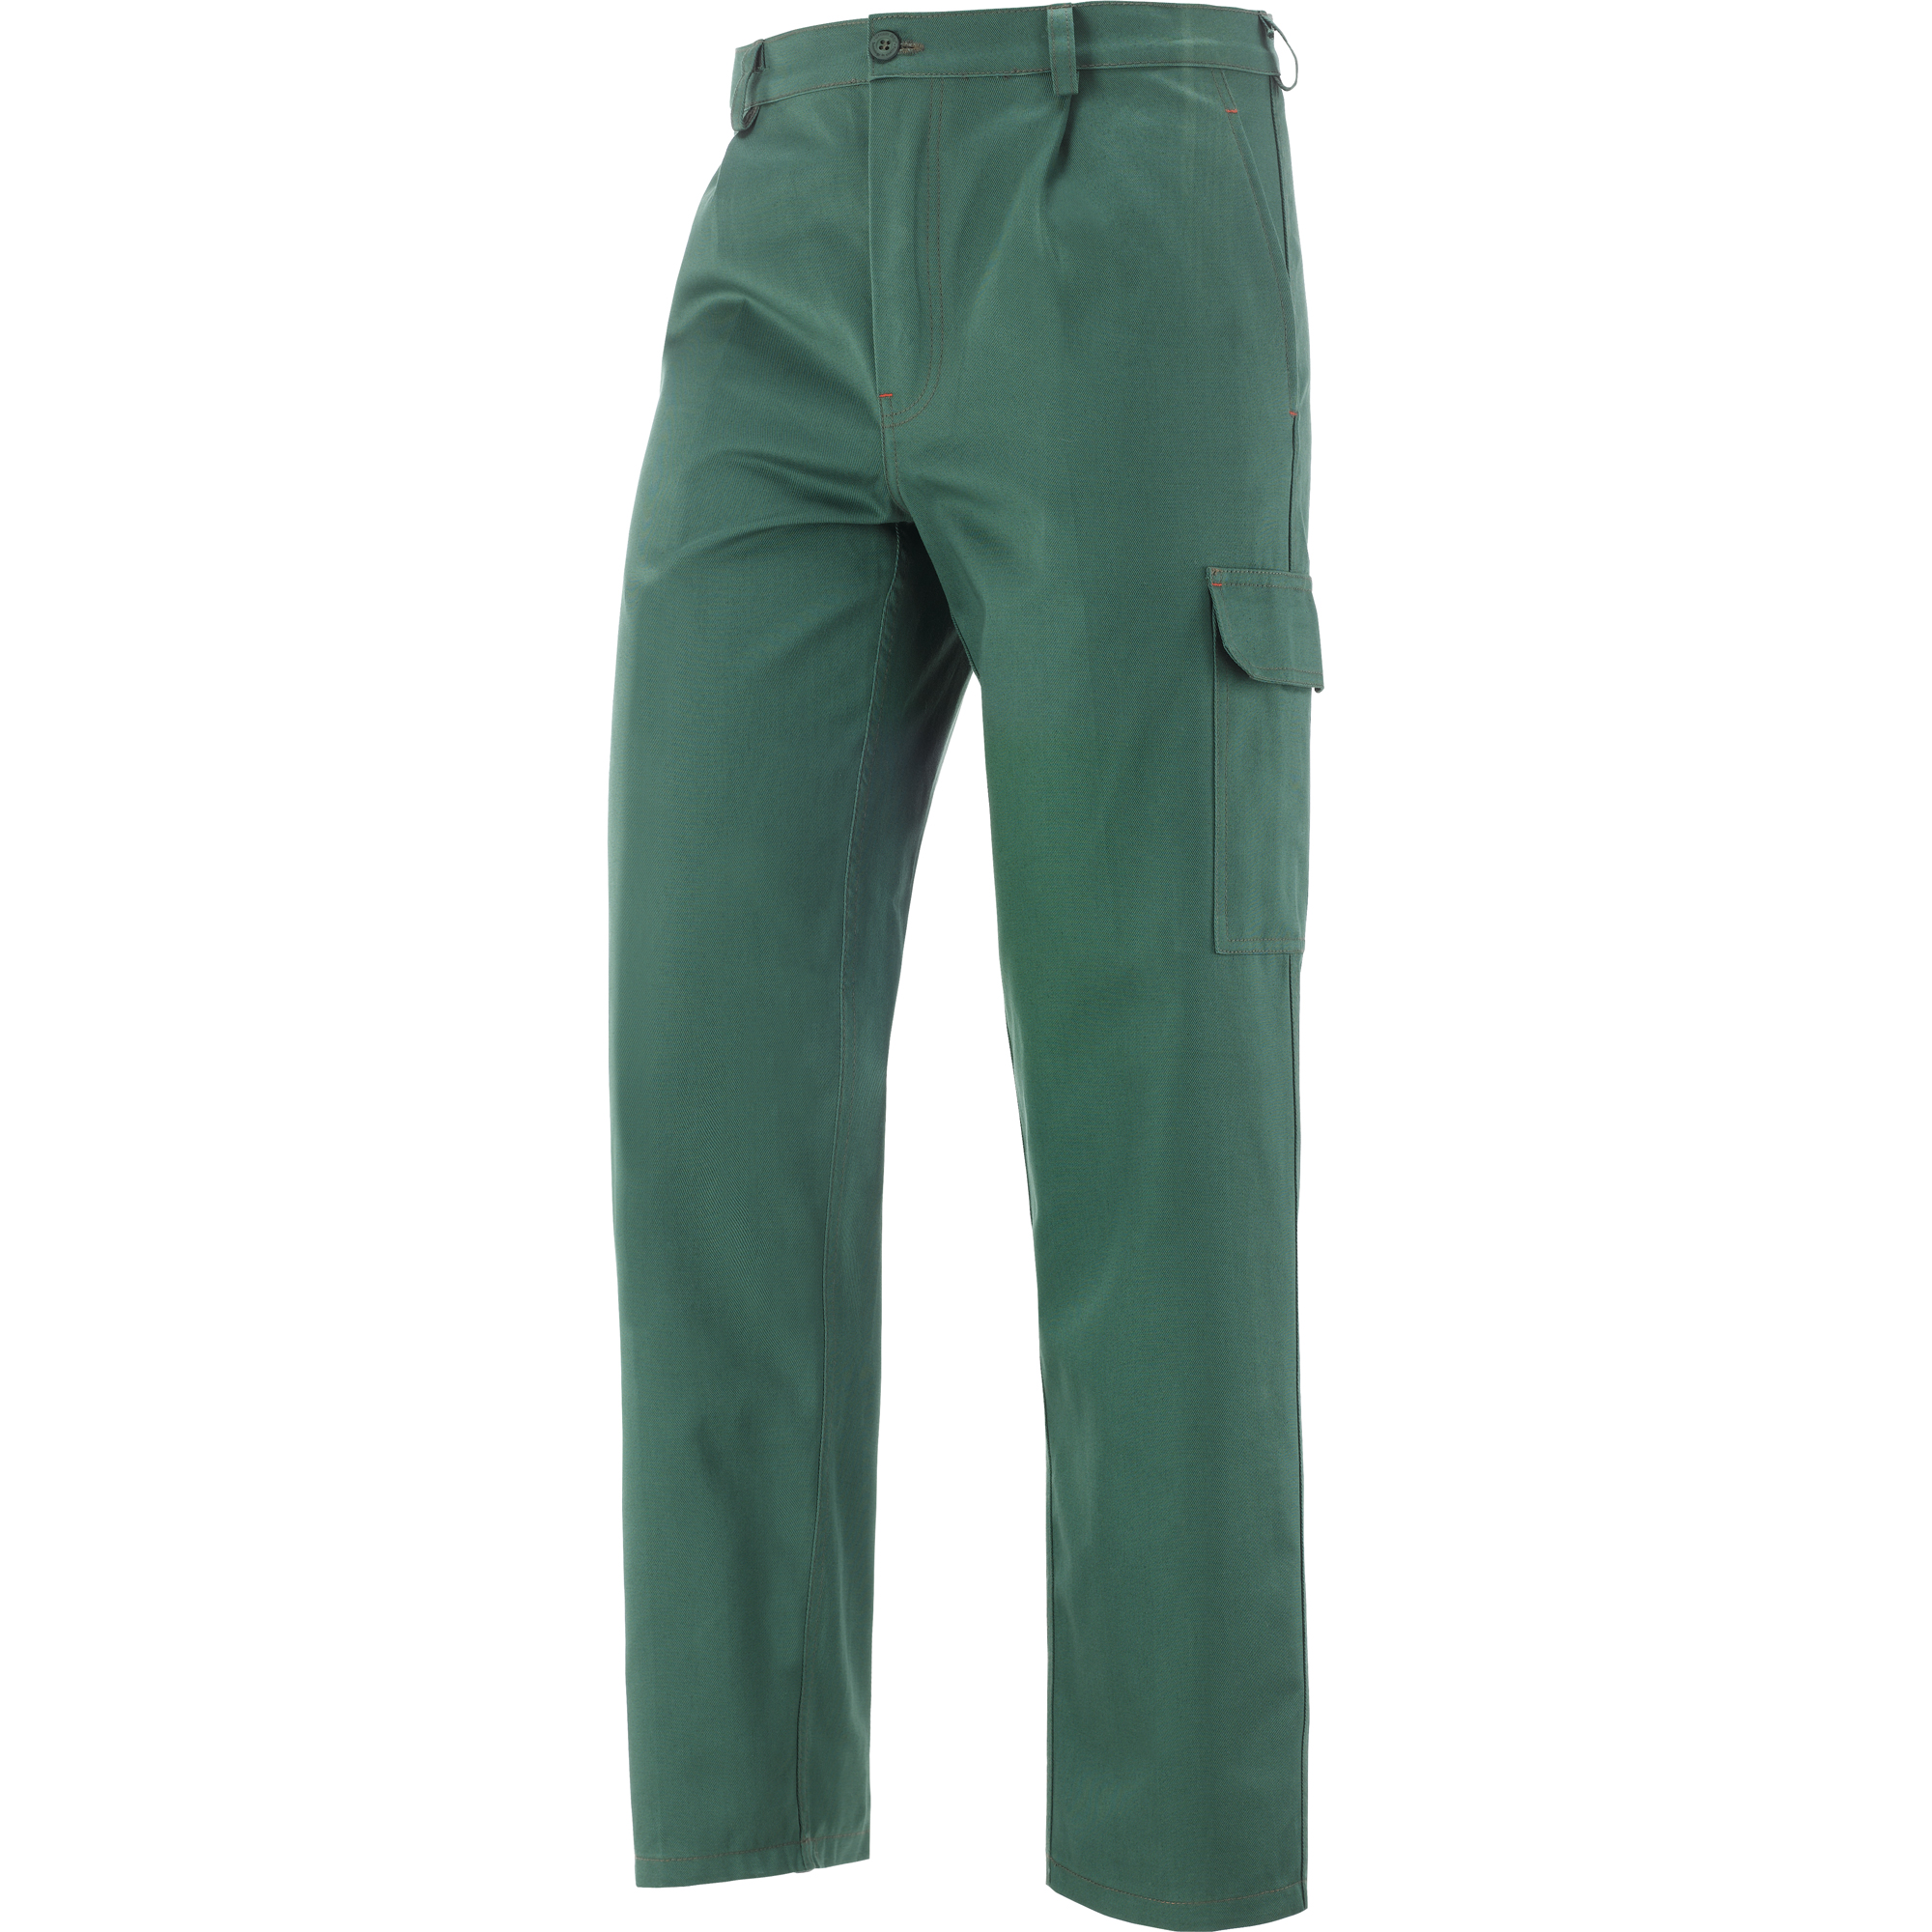 Pantaloni Neri Spa 435226 Super Verde Cargo, la sicurezza